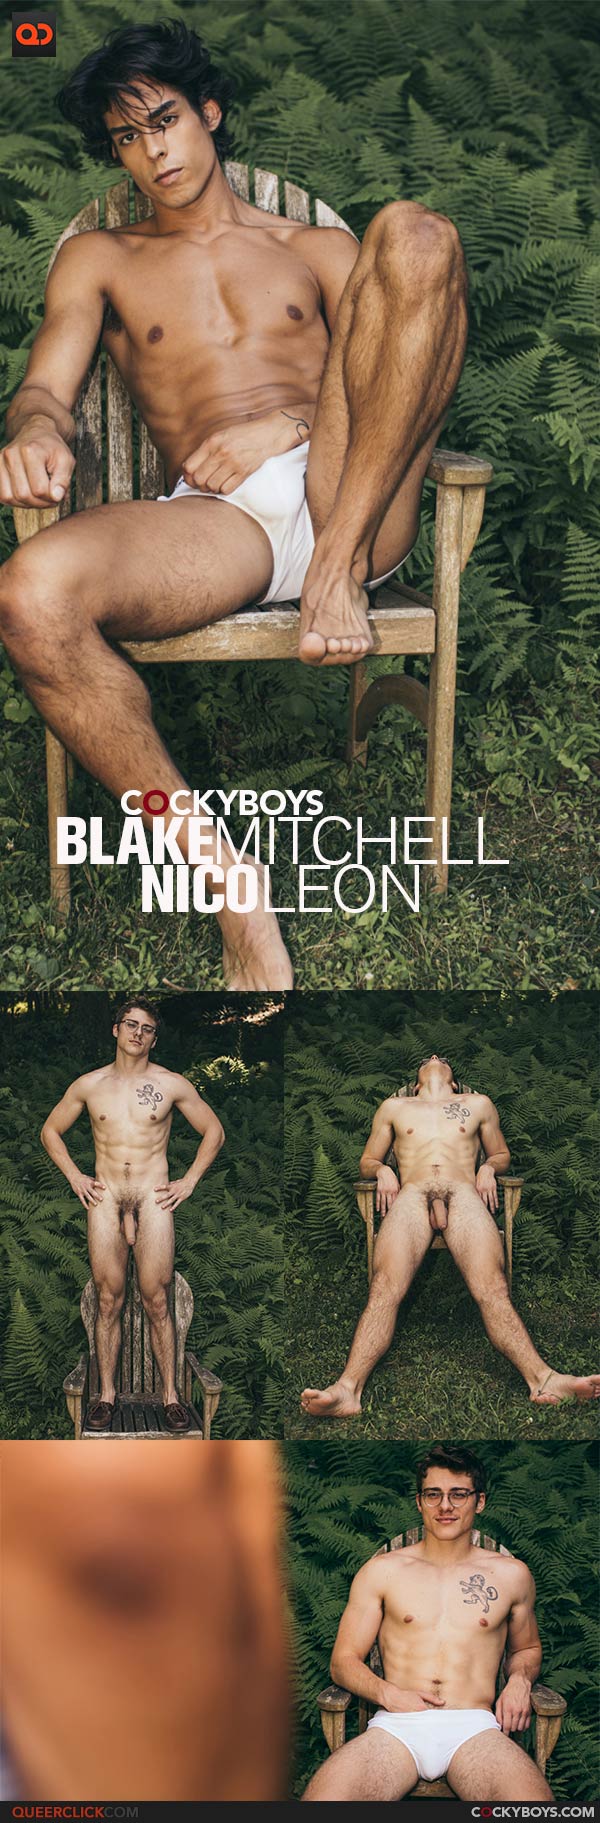 CockyBoys: Blake Mitchell and Nico Leon